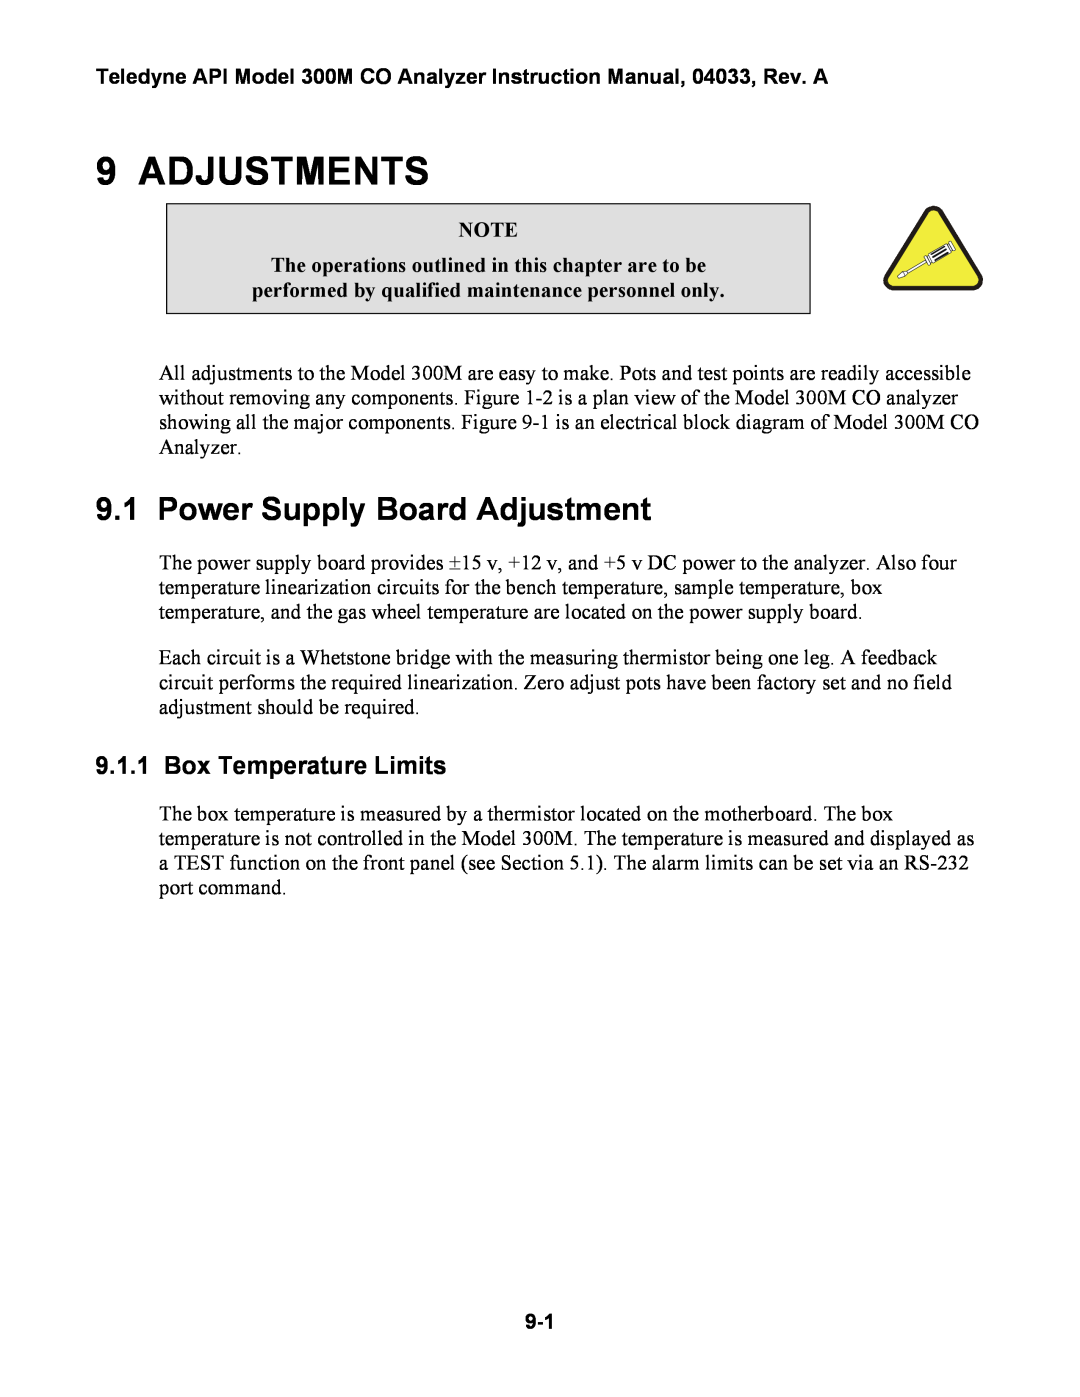 Teledyne 300M instruction manual Adjustments, Power Supply Board Adjustment, Box Temperature Limits 